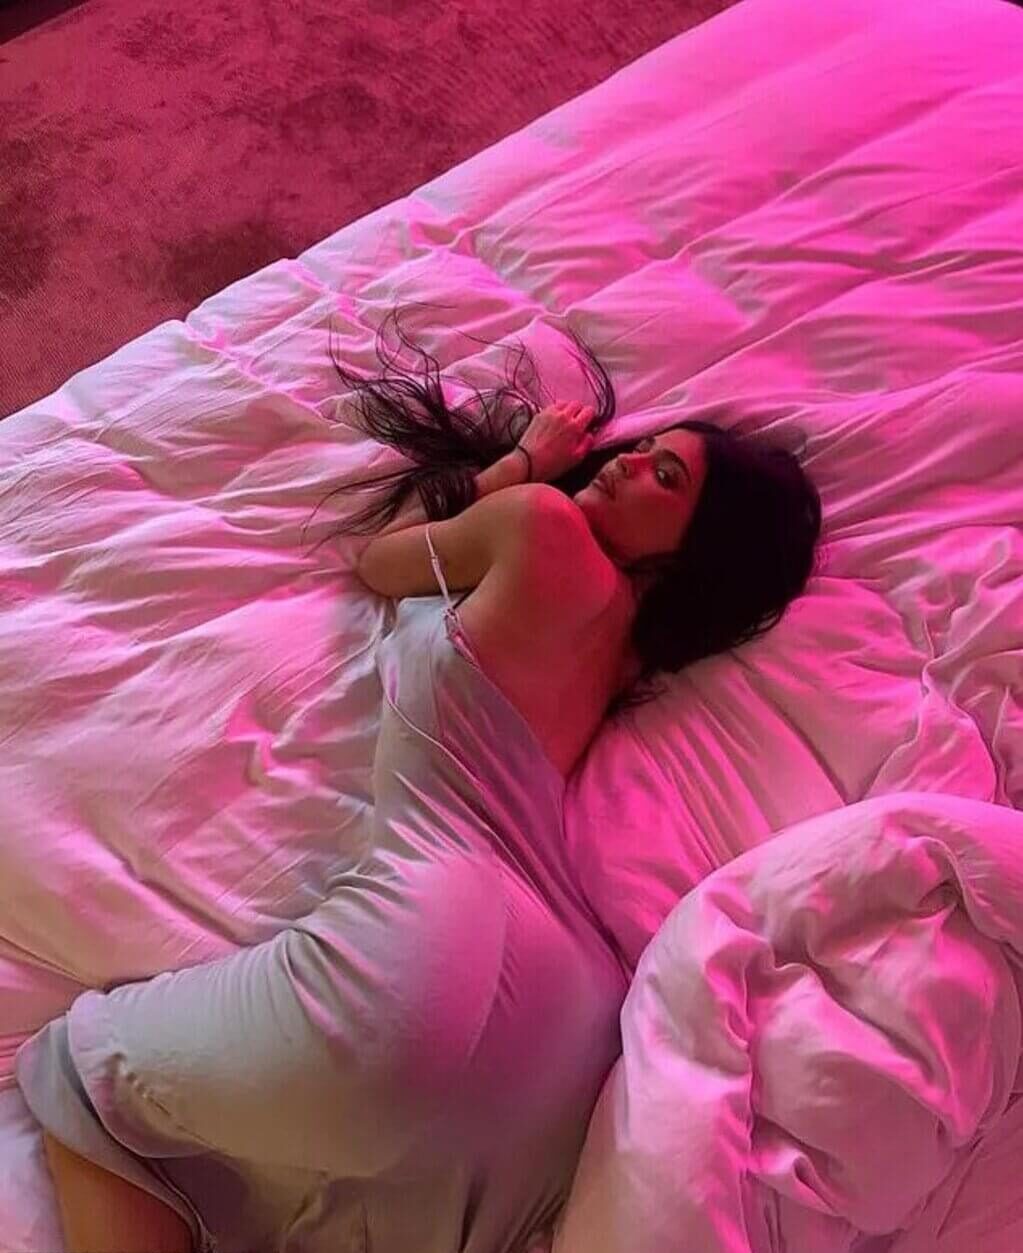 Kylie Jenner's bedroom photos go viral